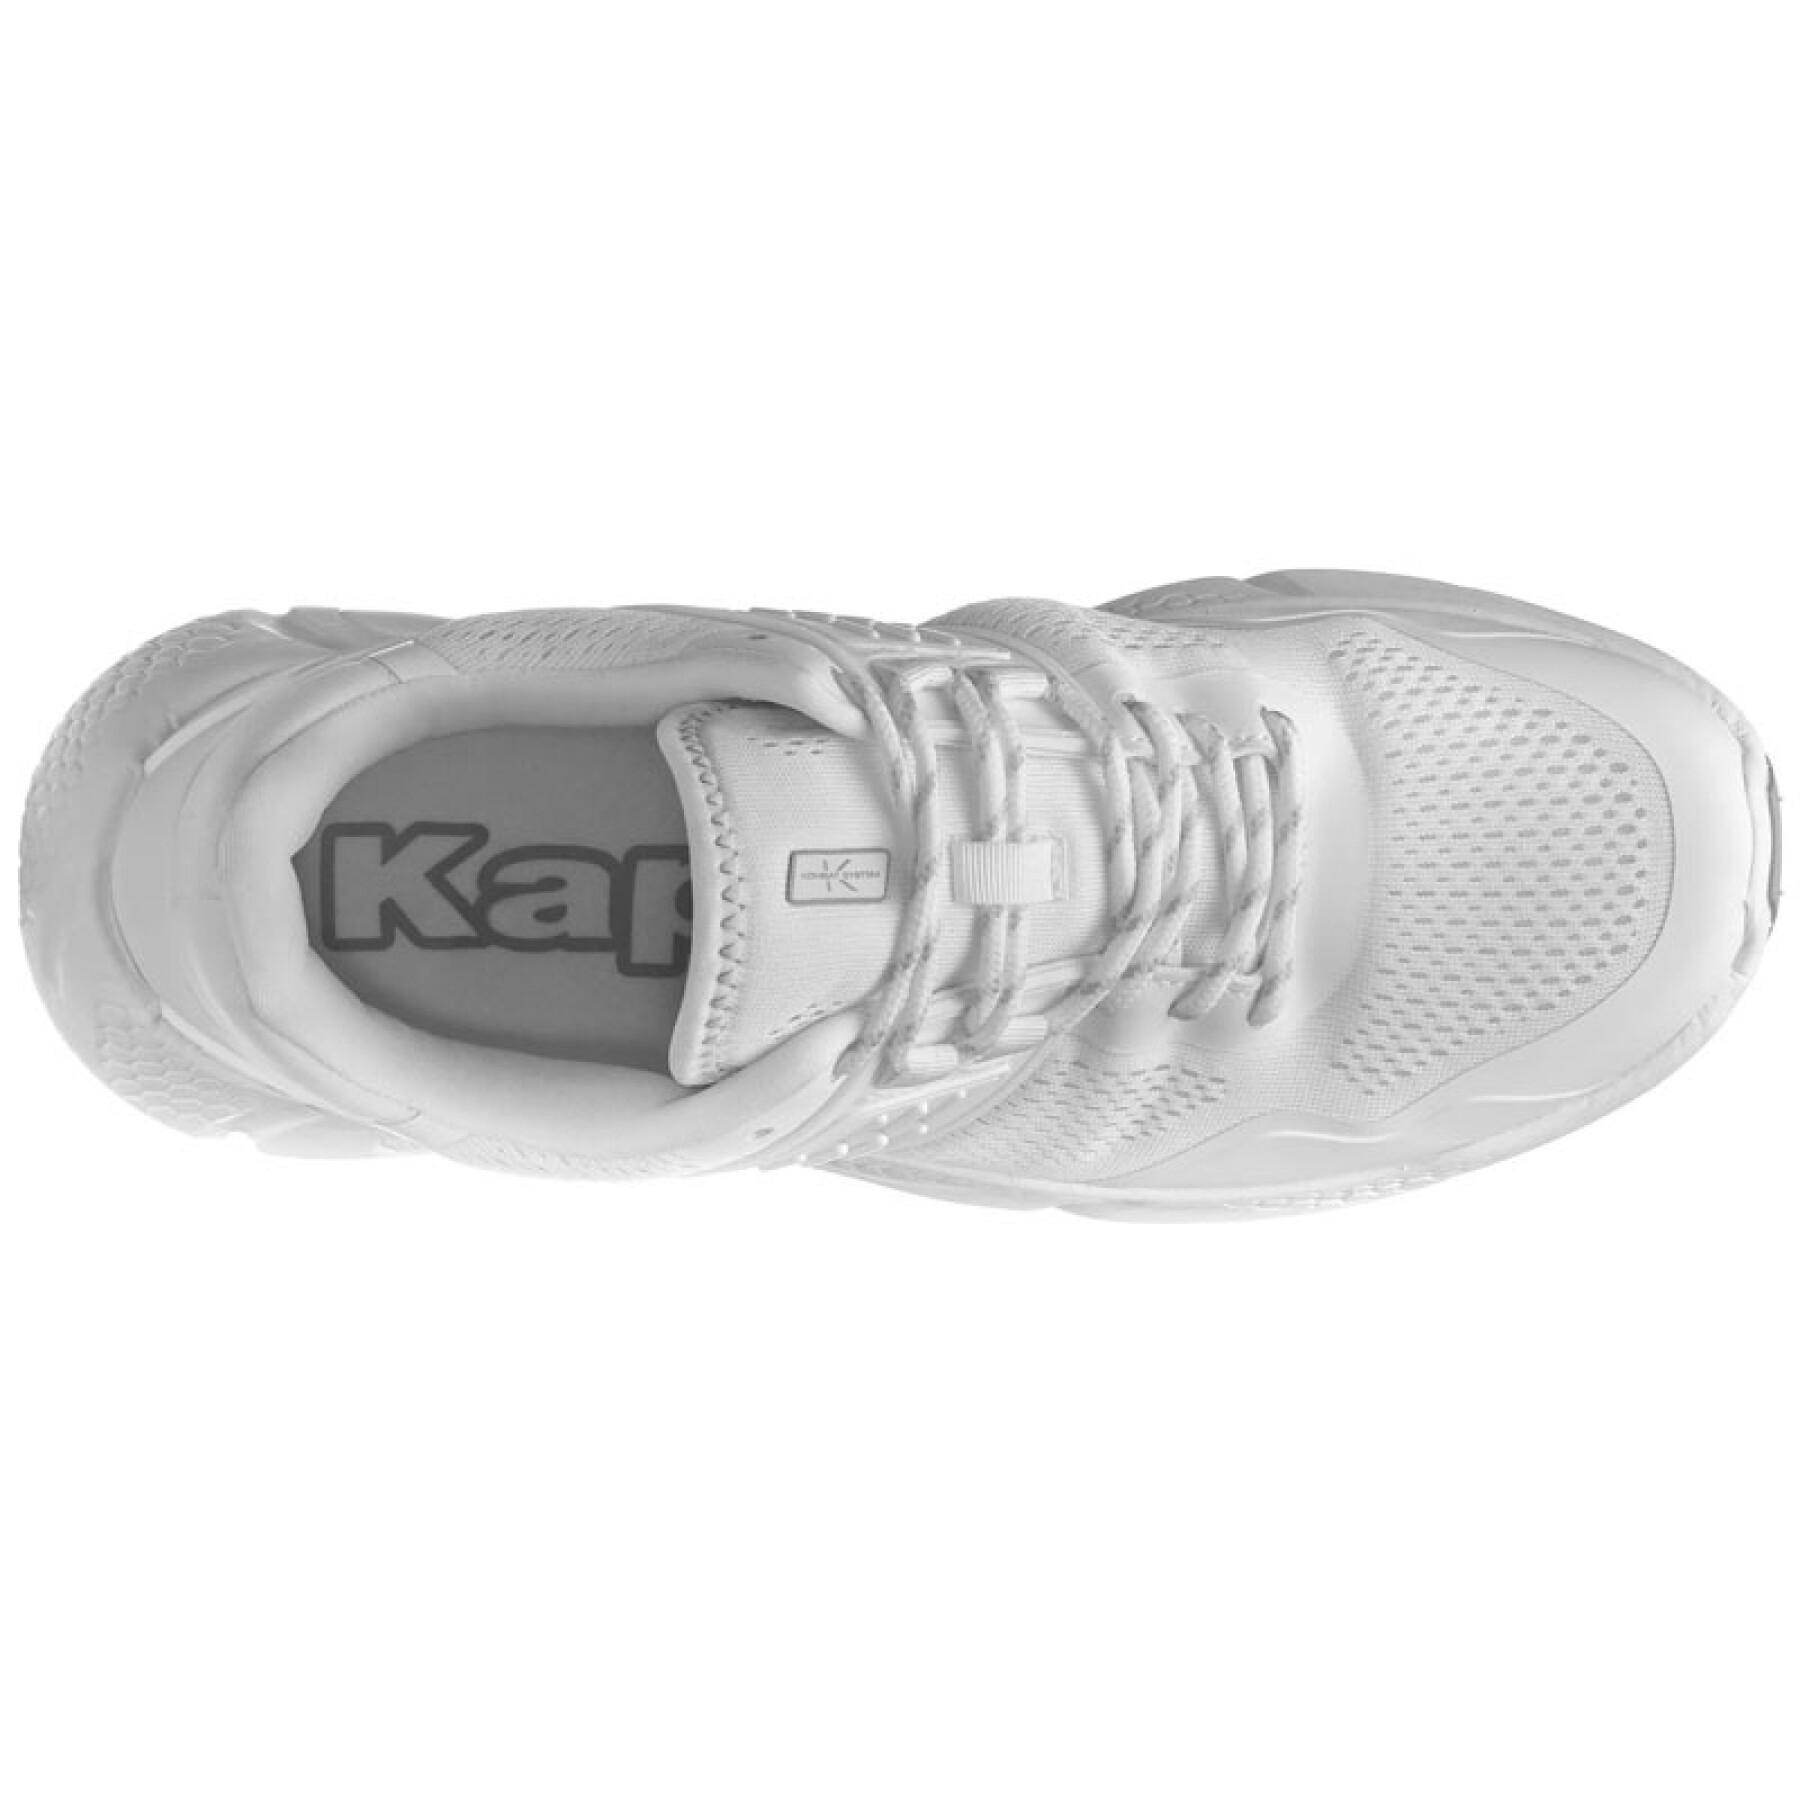 Chaussures de cross training Kappa KOMBAT CLEAN